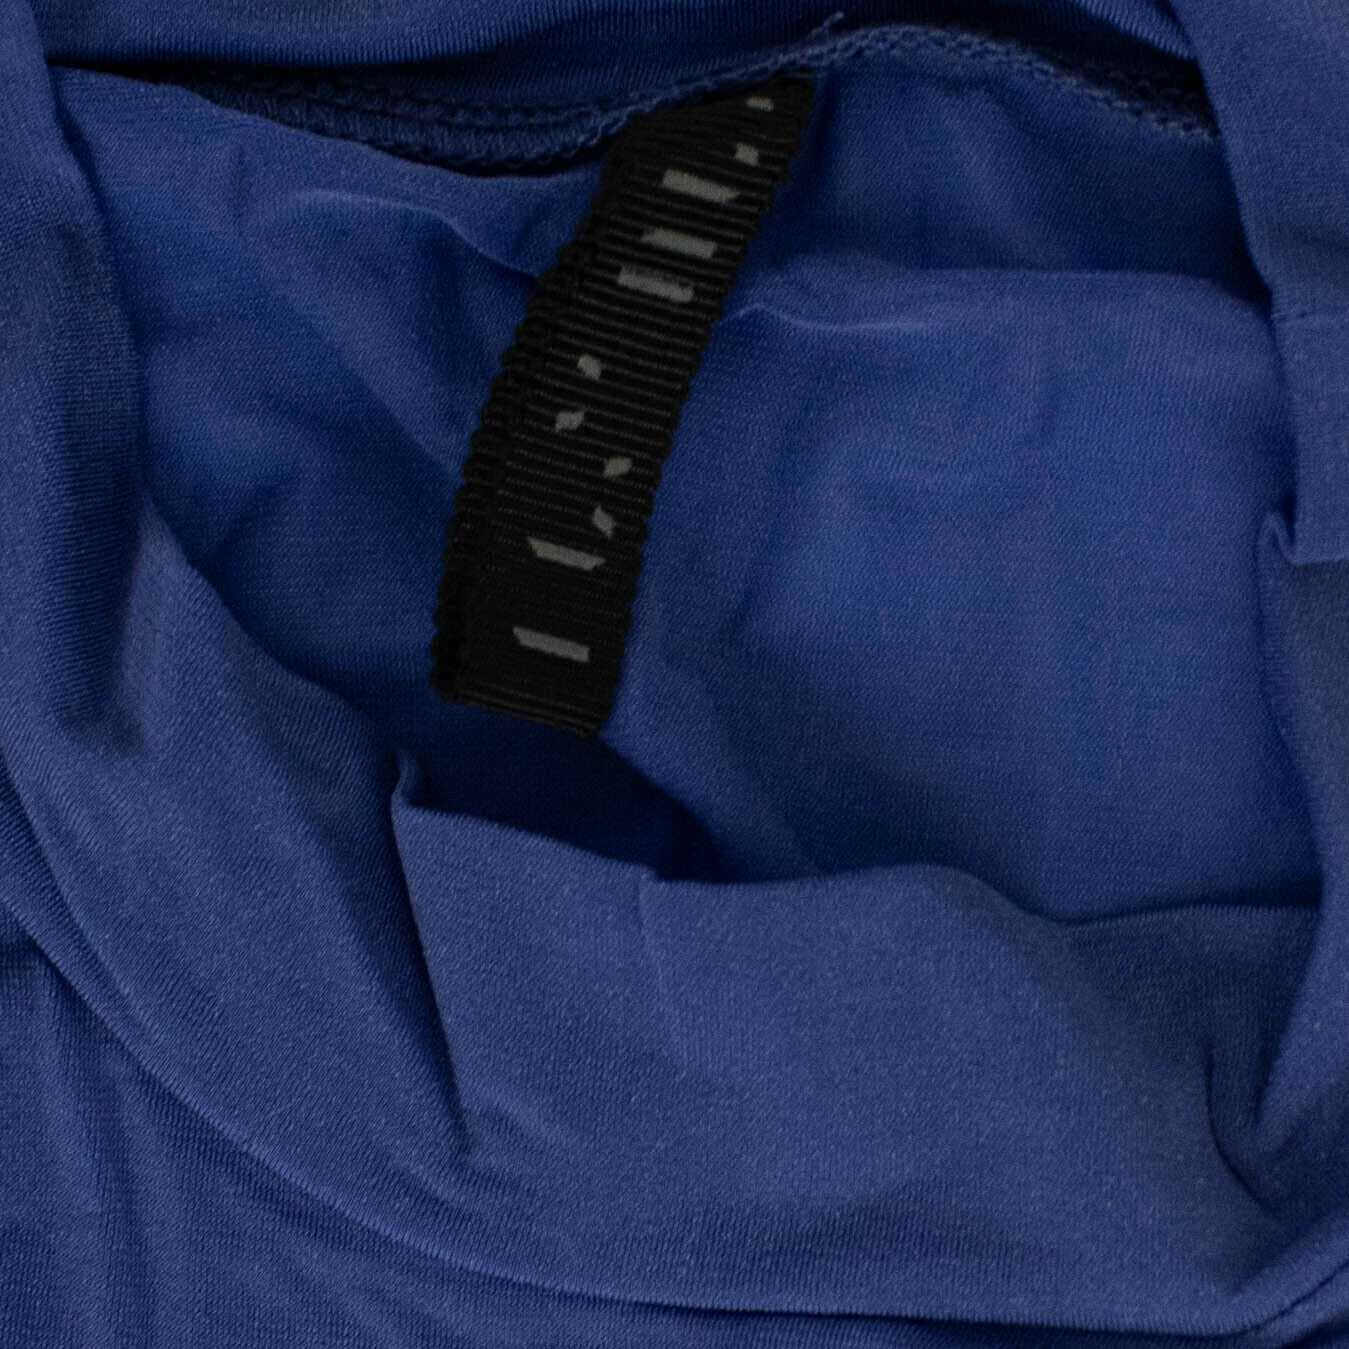 Unravel Project Rib Hybrid Dress - Blue